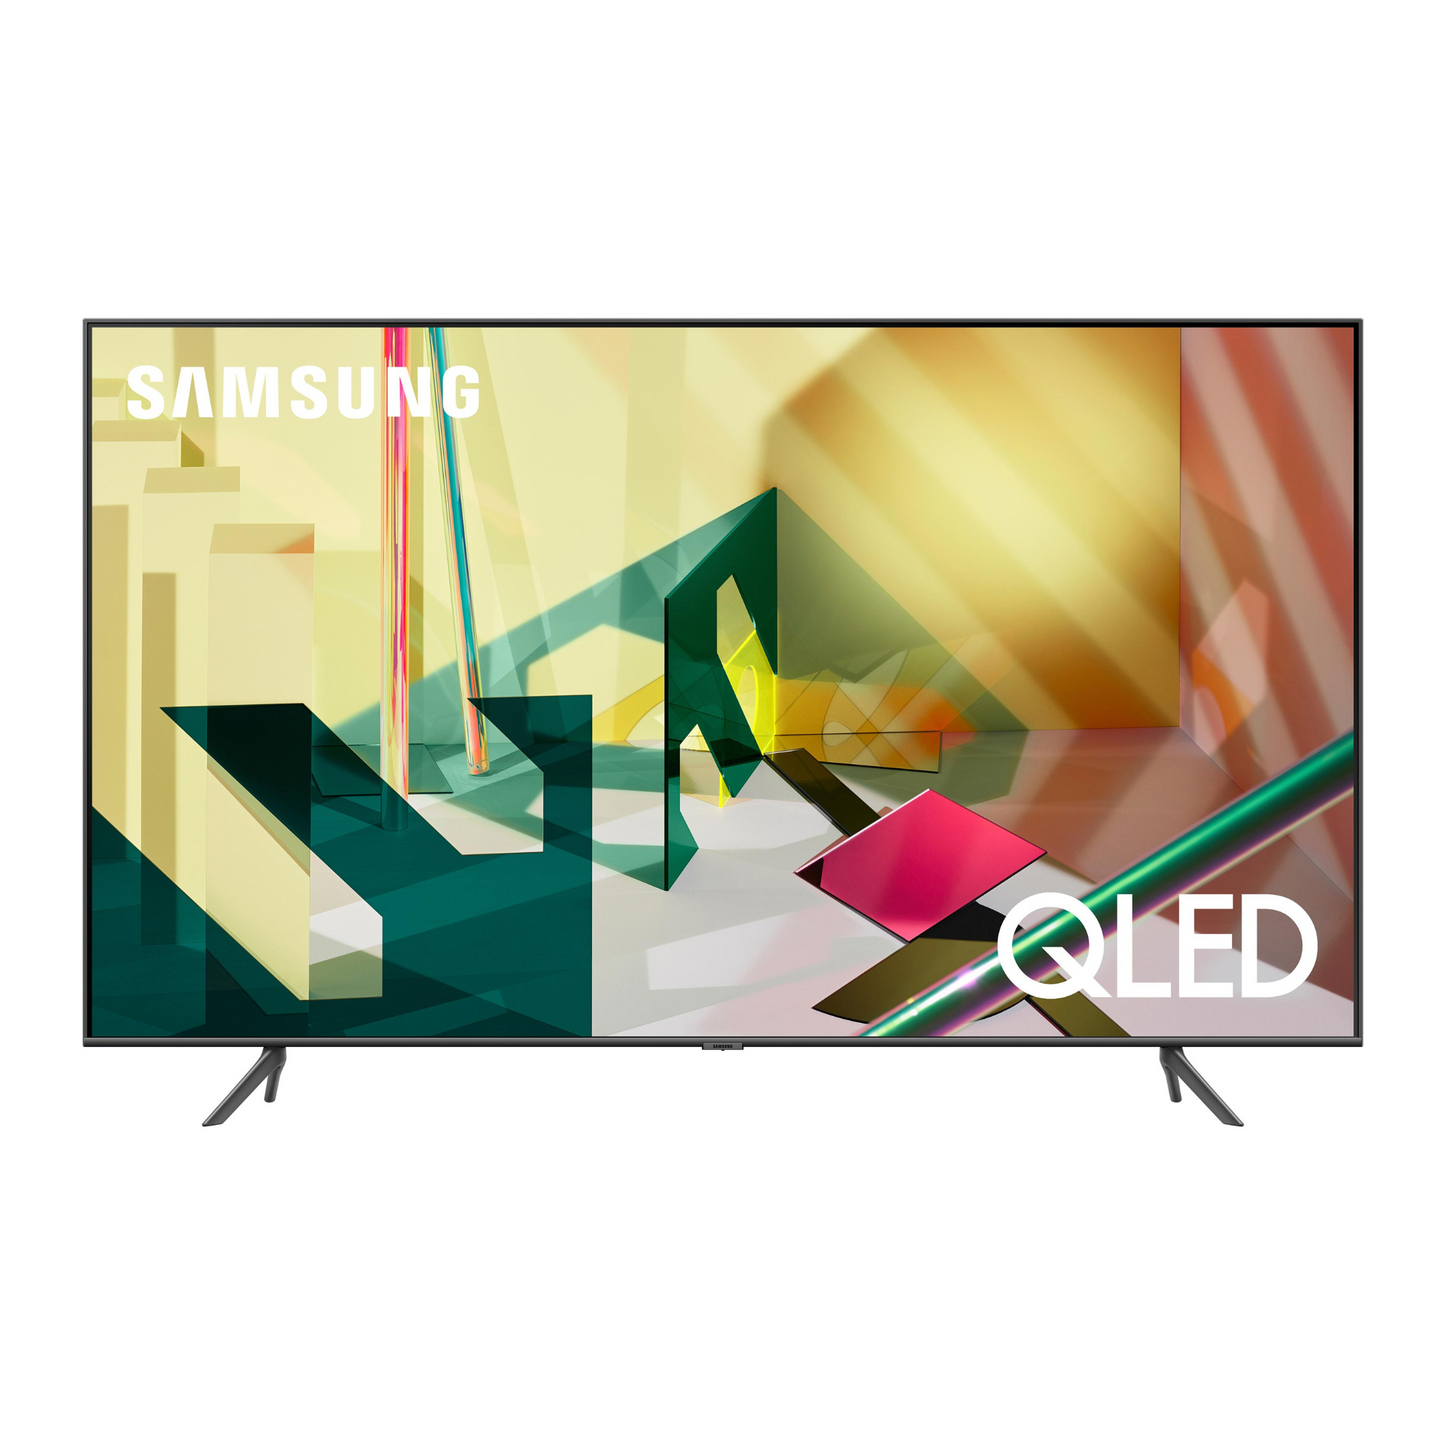 Samsung 50 inch Smart QLED TV, 50Q60T